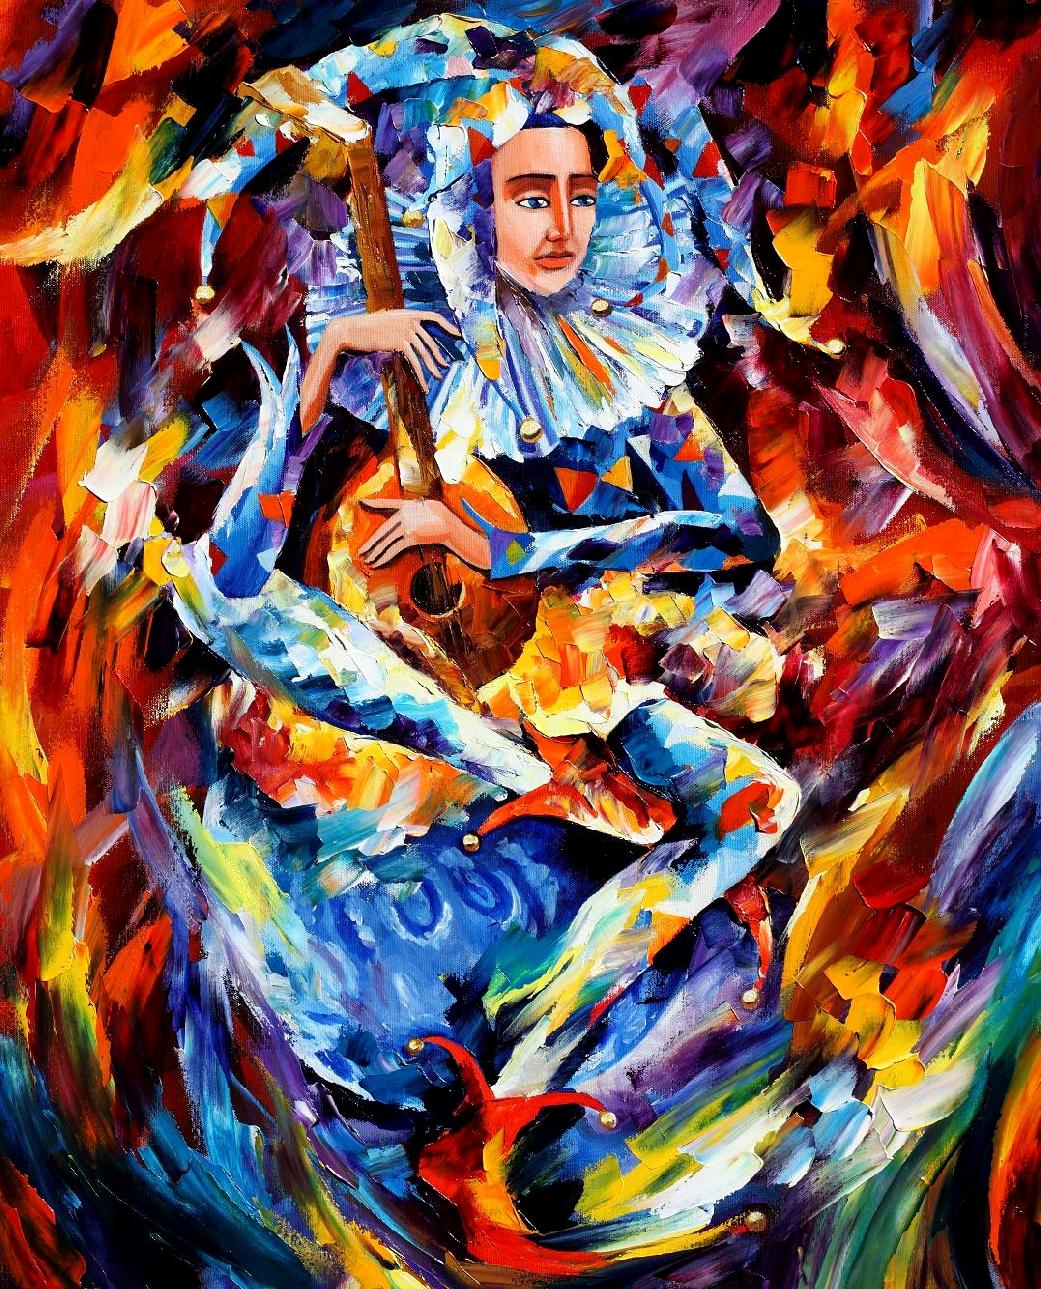 Jester — Print On Canvas By Leonid Afremov - Size 24" X 30" (60cm X 75cm)